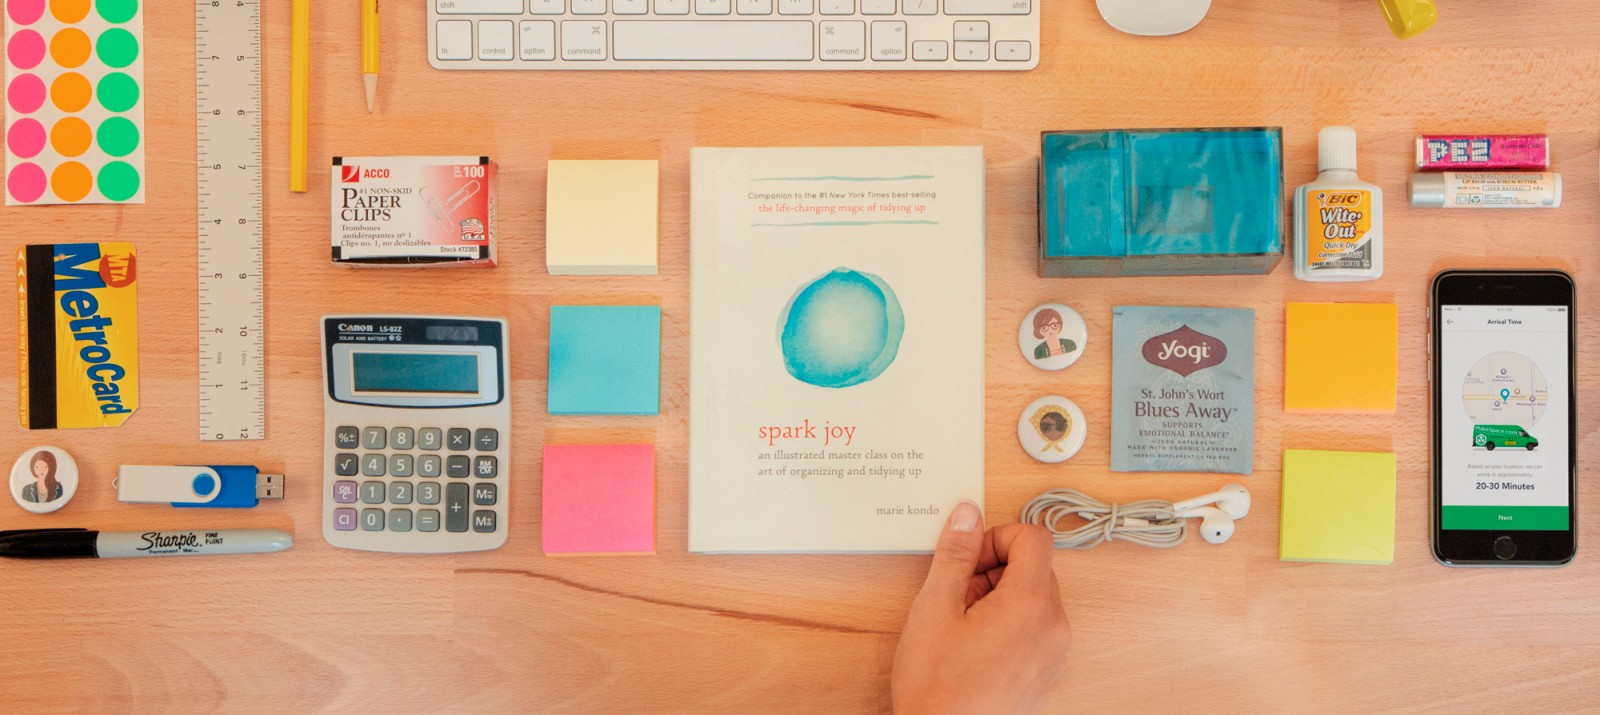 Marie Kondo's new book Spark Joy is on a desk that's organized neatly.